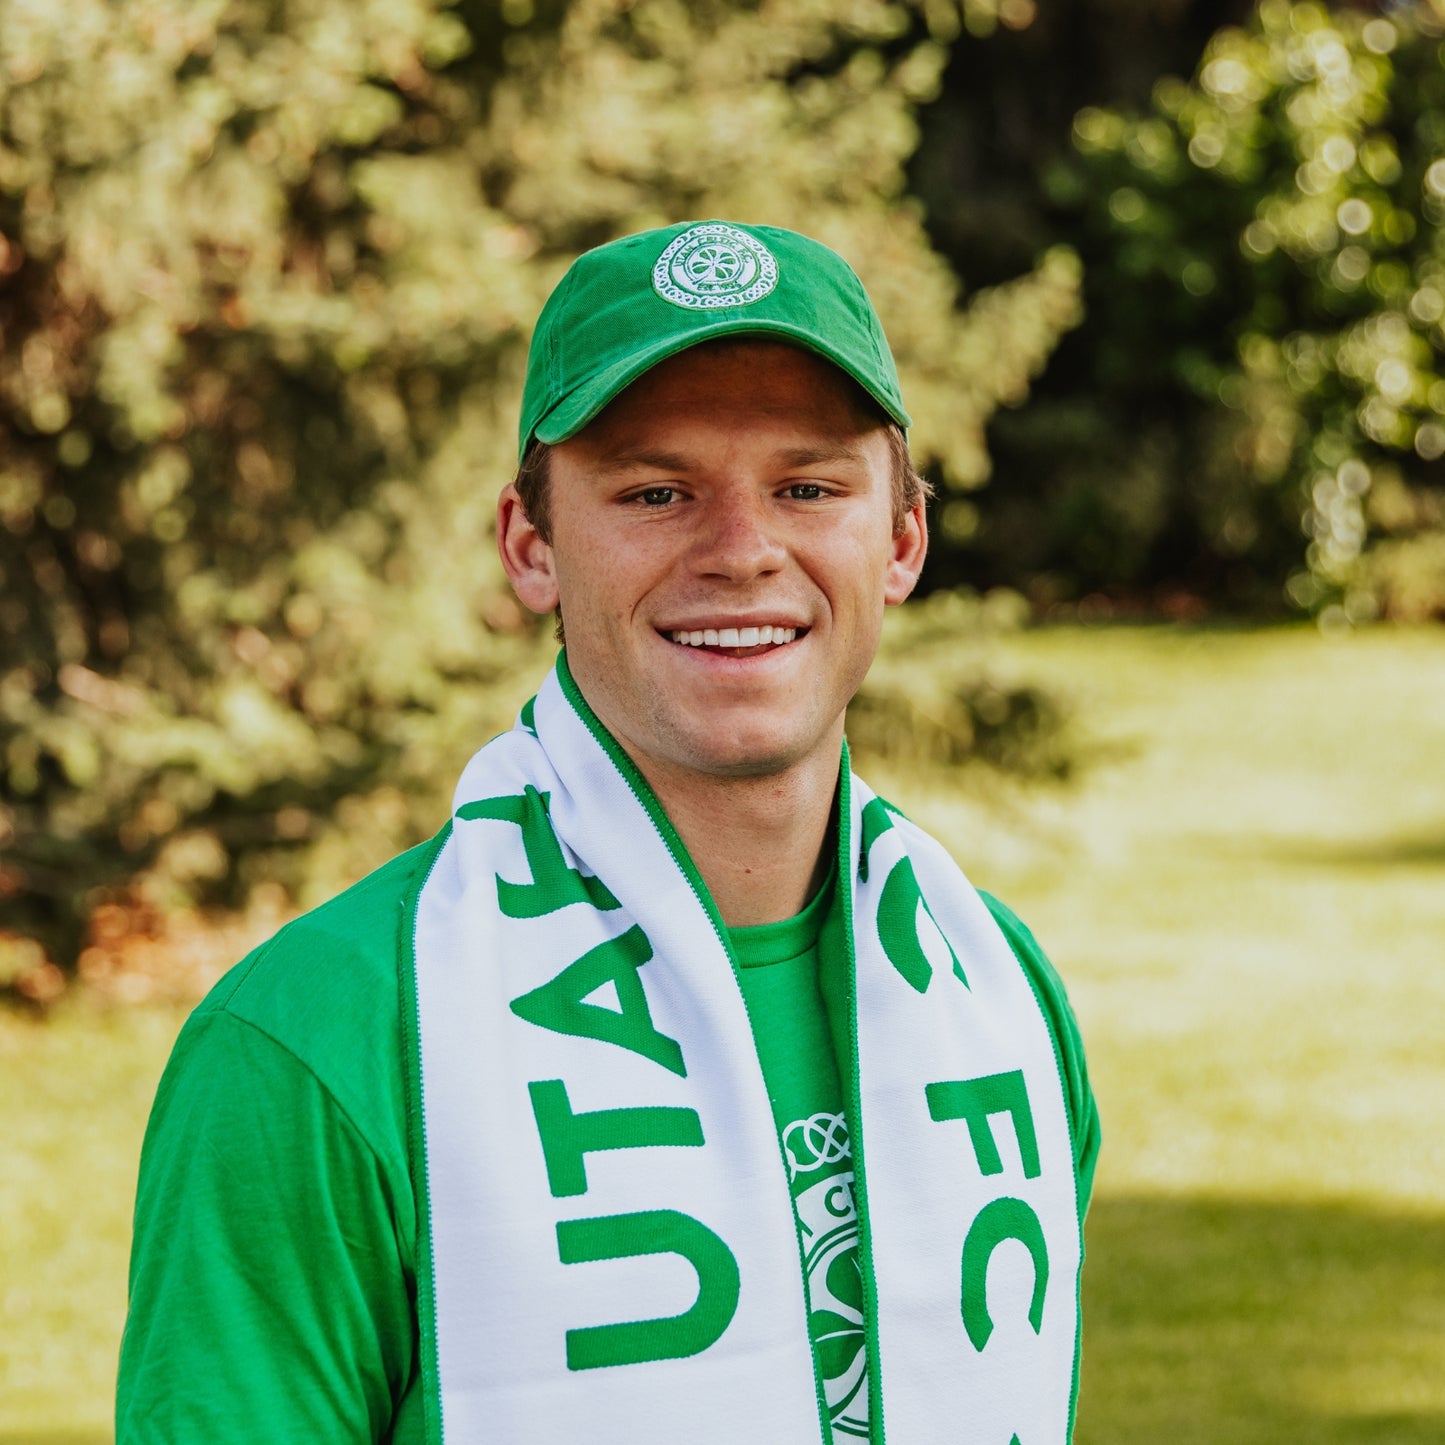 Utah Celtic FC Washed Chino Hat